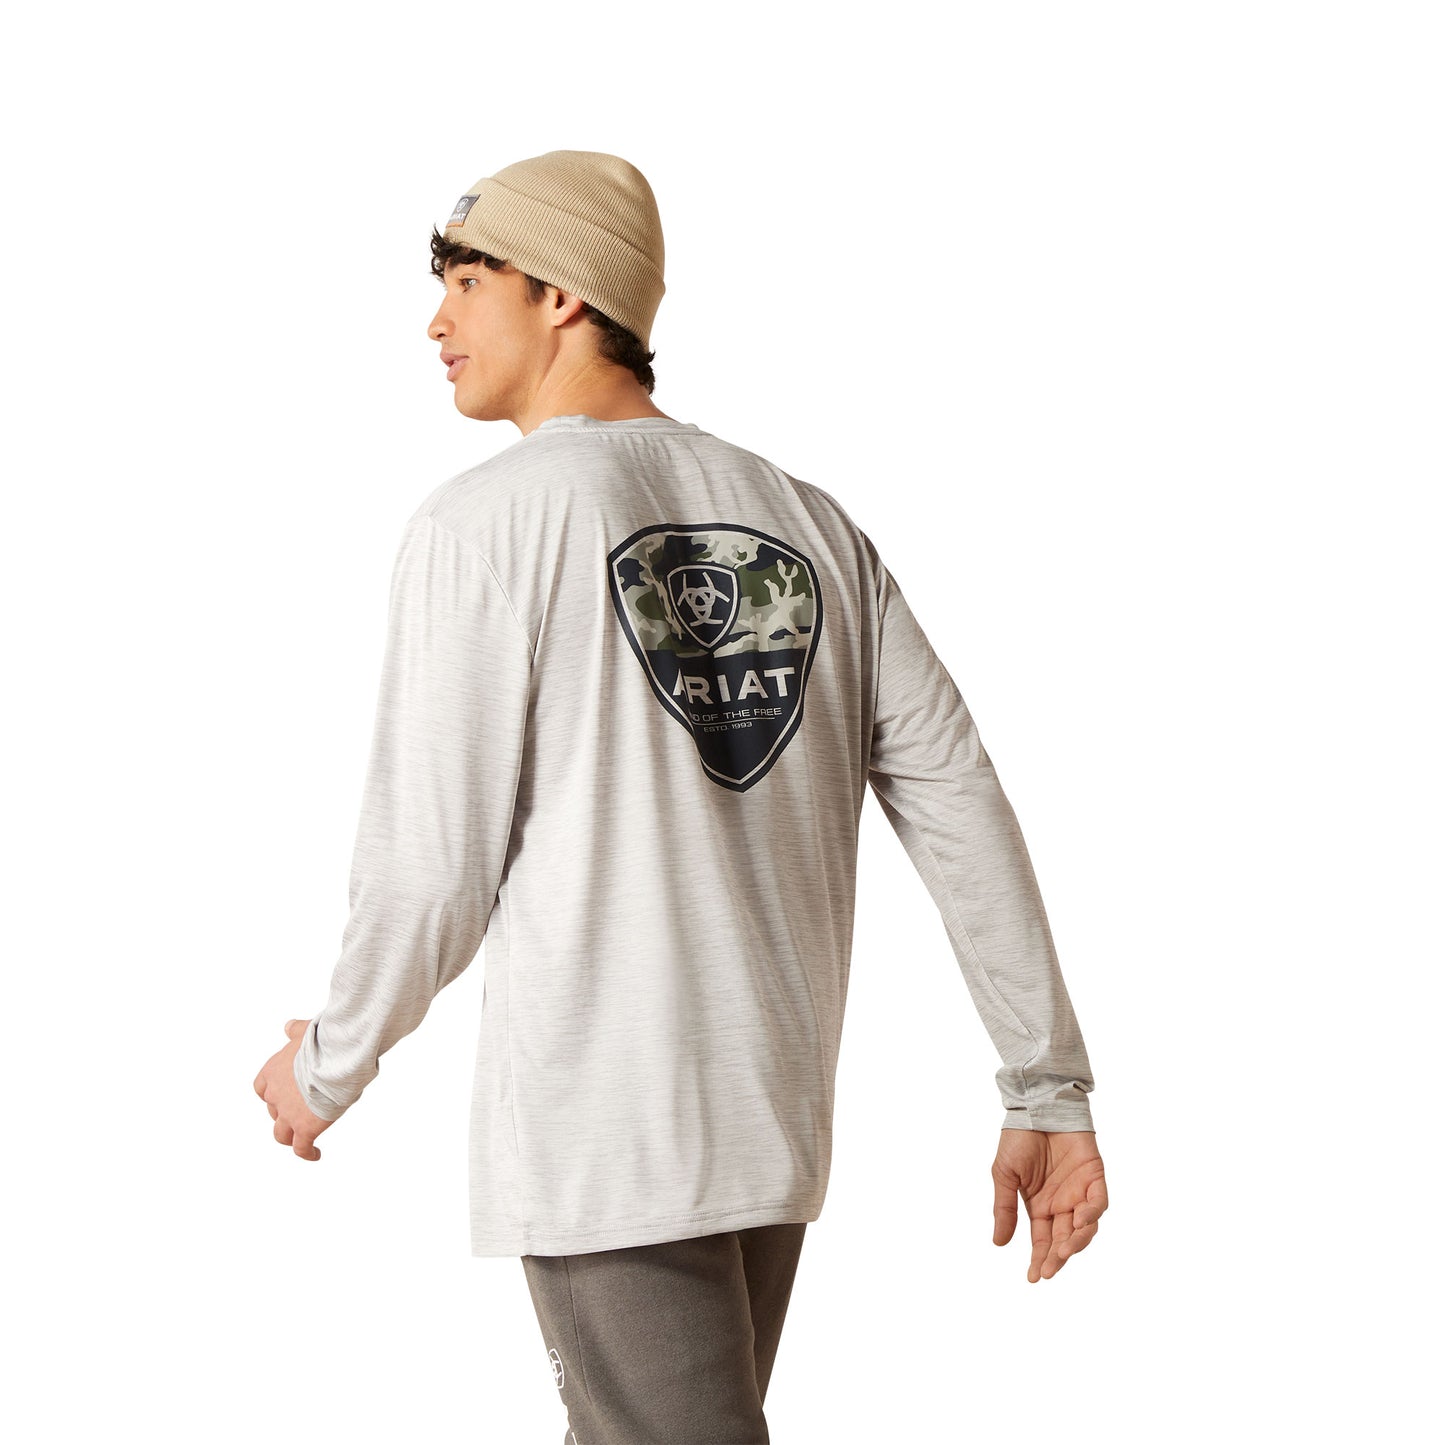 Ariat Men's Charger Camo Corps Light Grey Heather T-Shirt 10046425